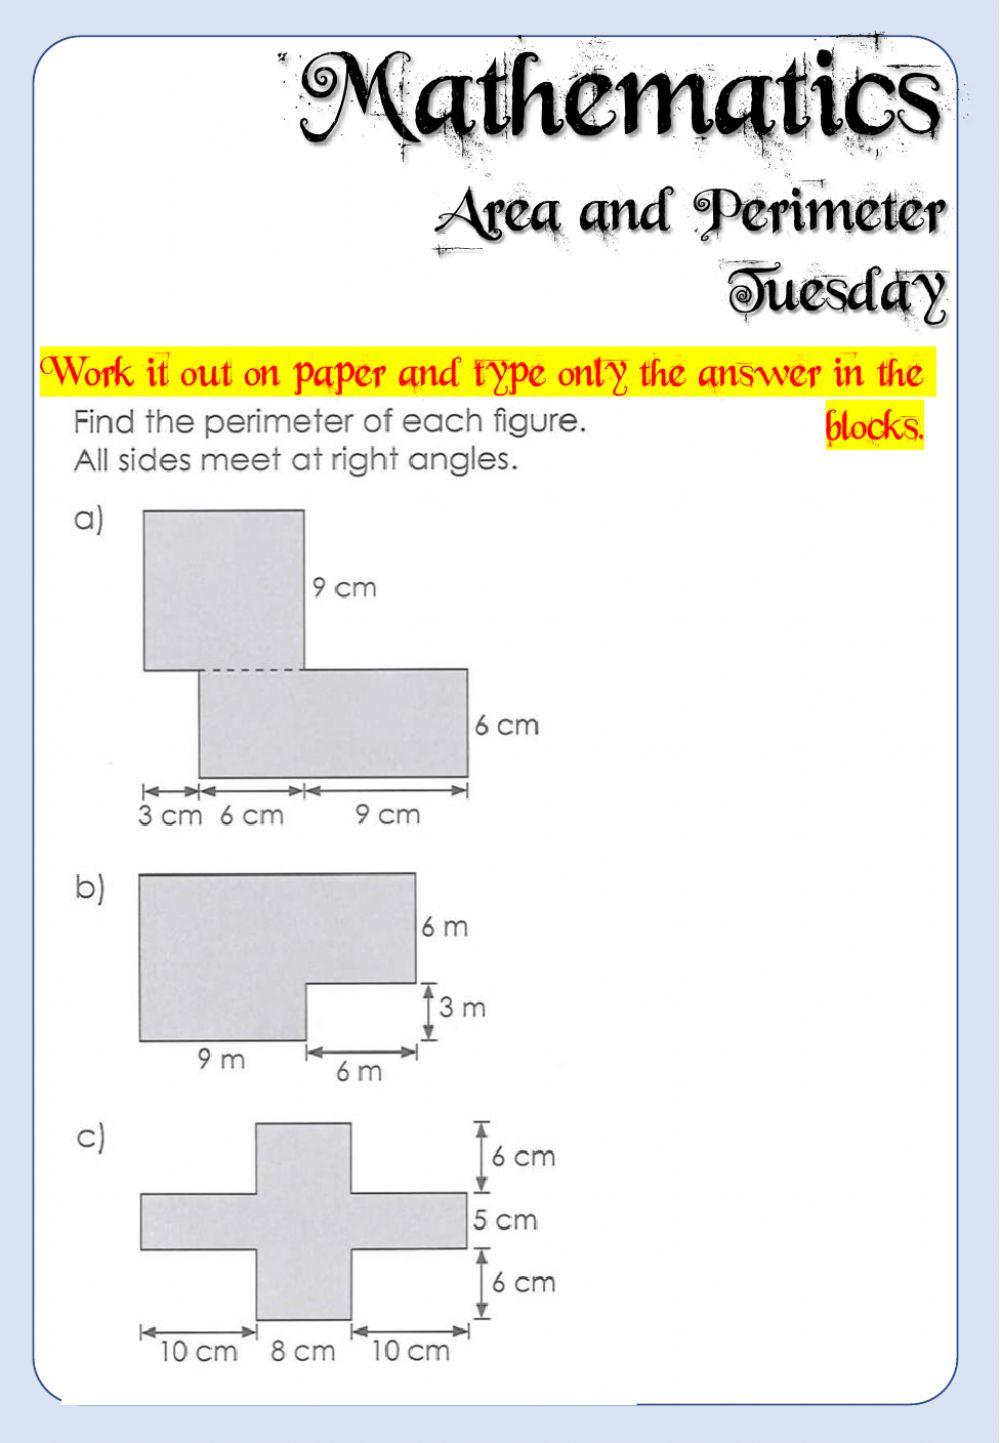 Week 23 - Mathematics - Tuesday 6